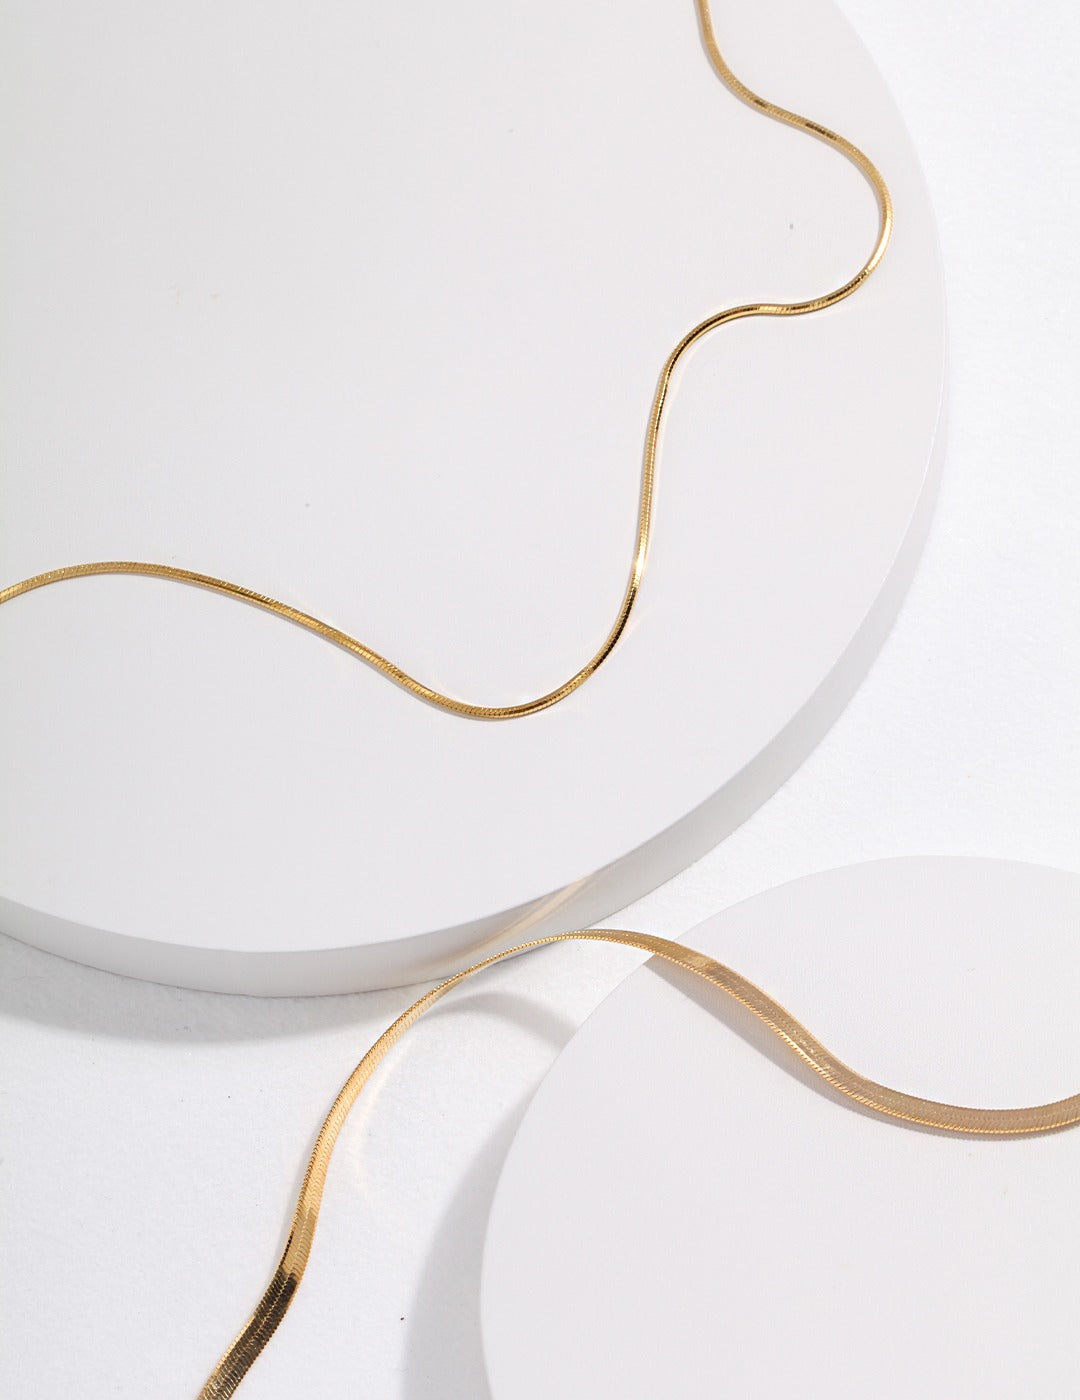 18k gold strand necklaces